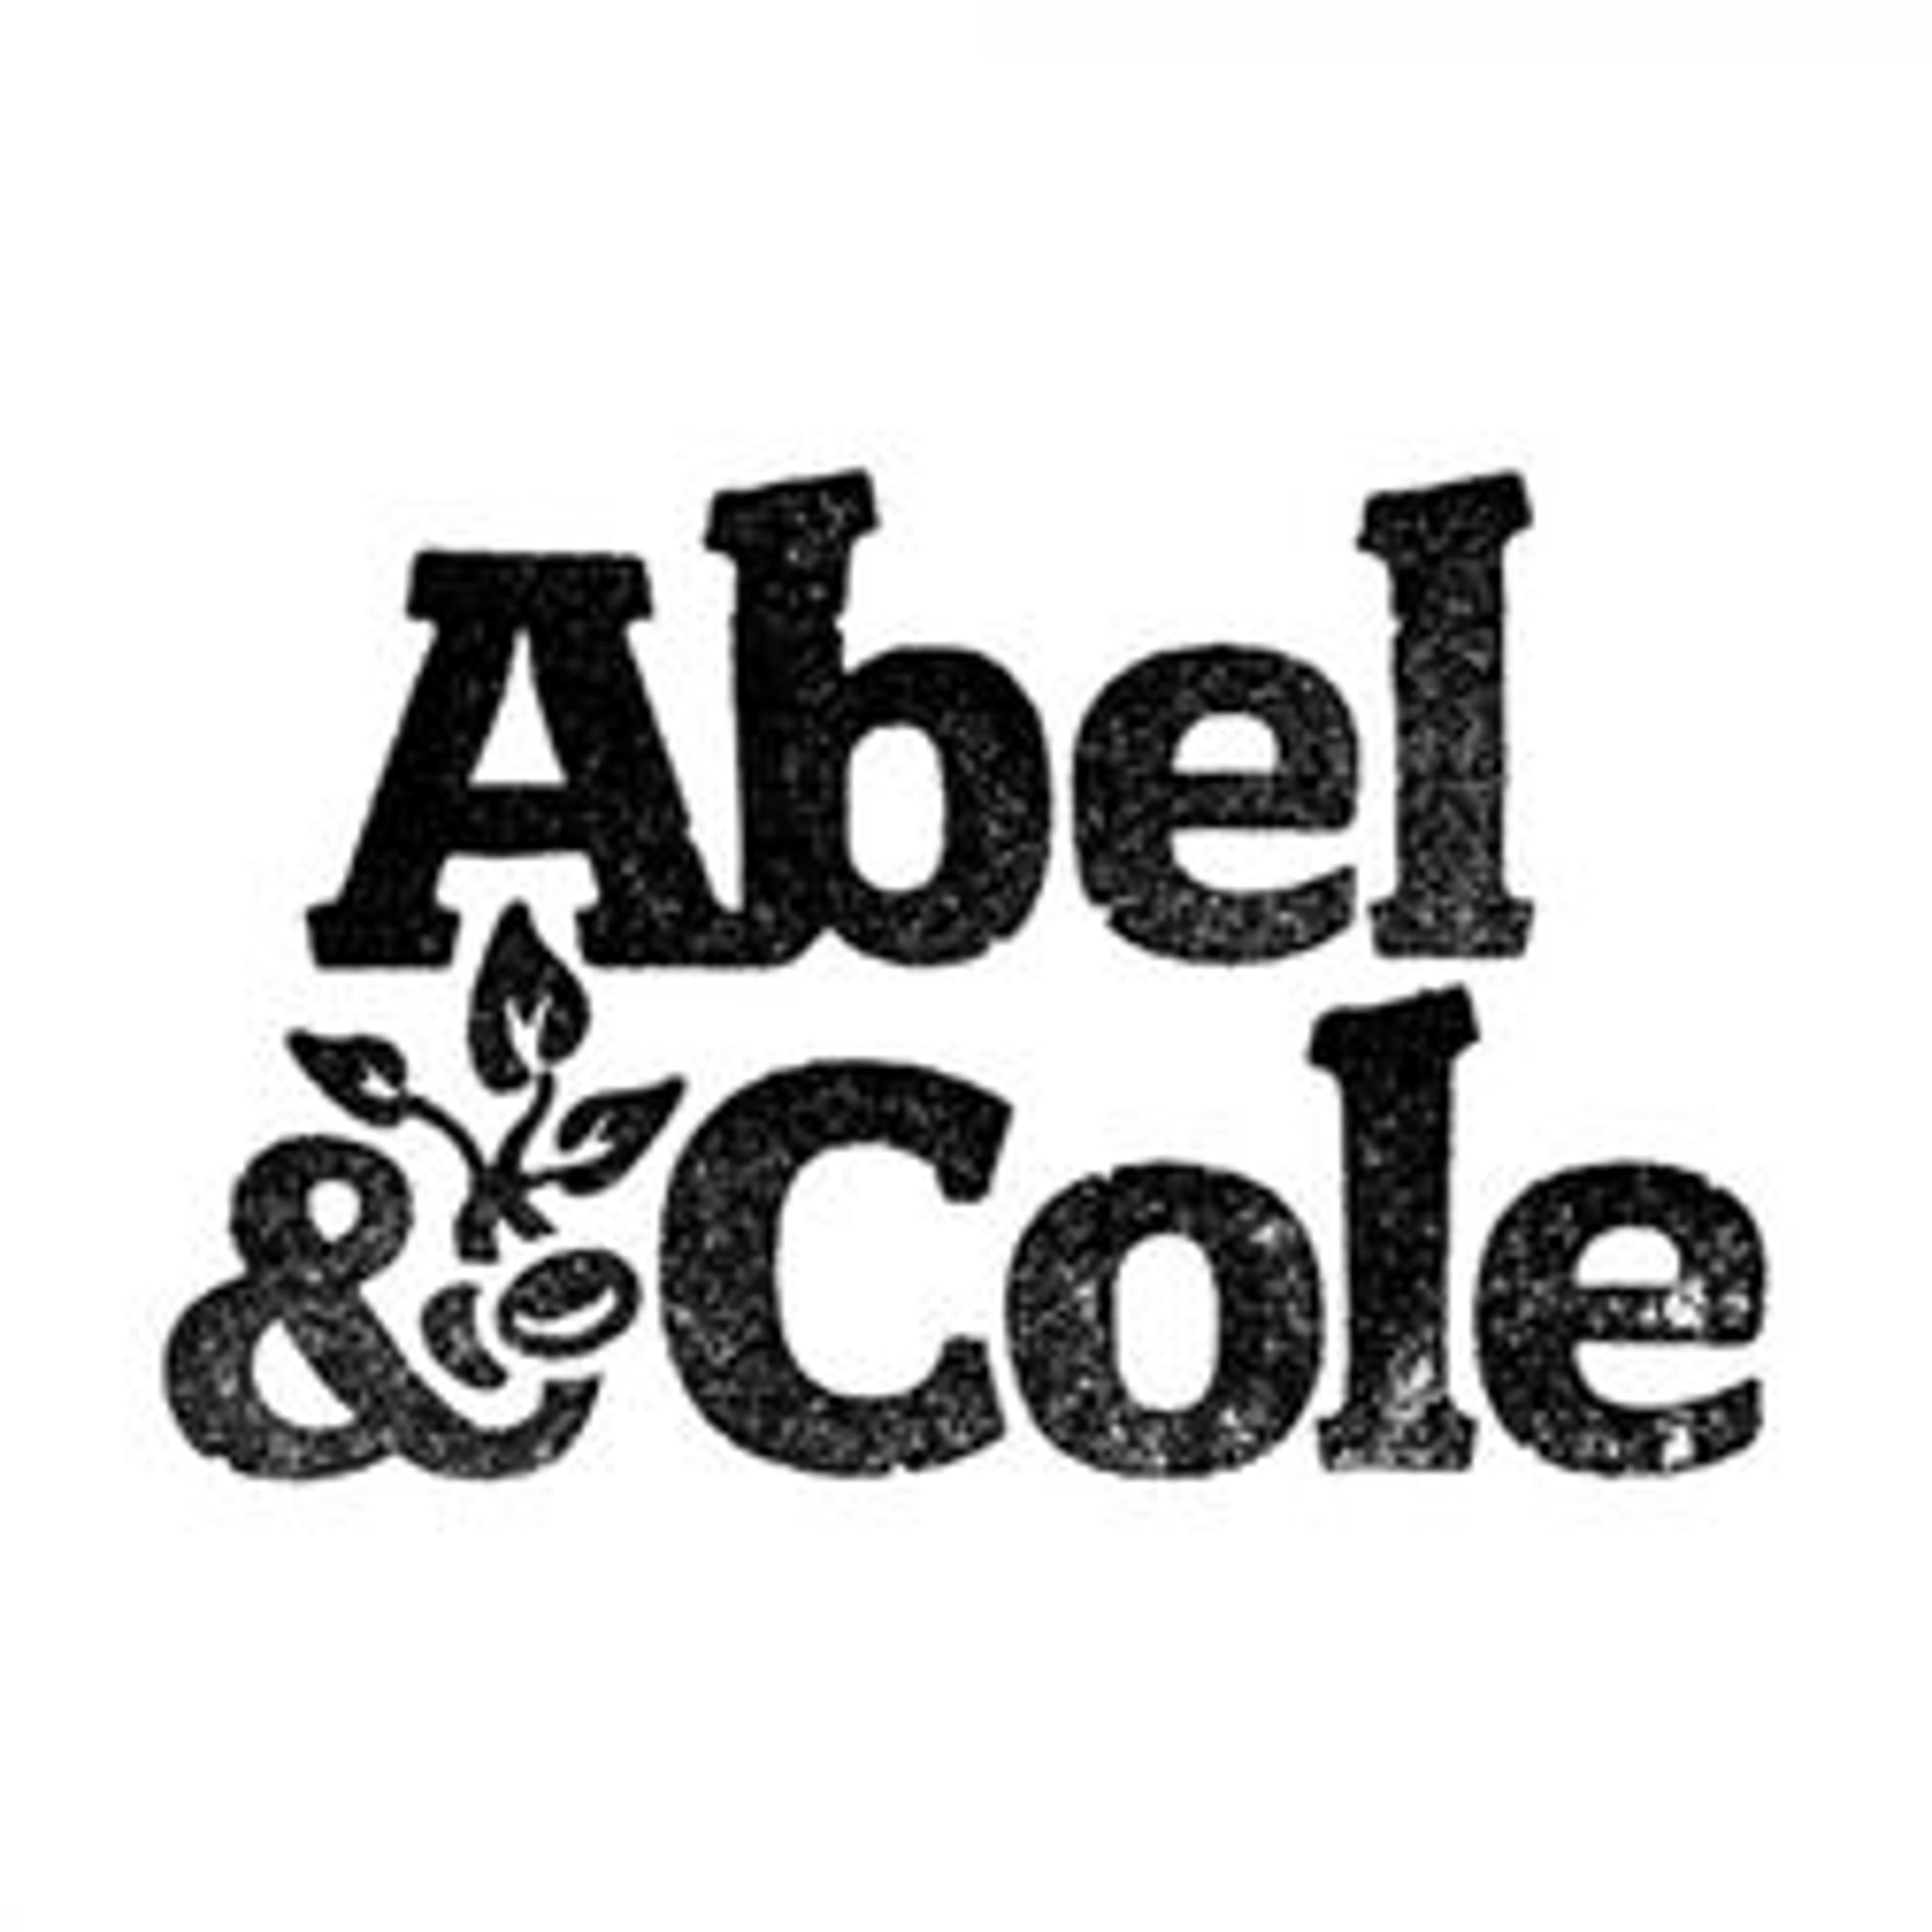  Abel & Cole 